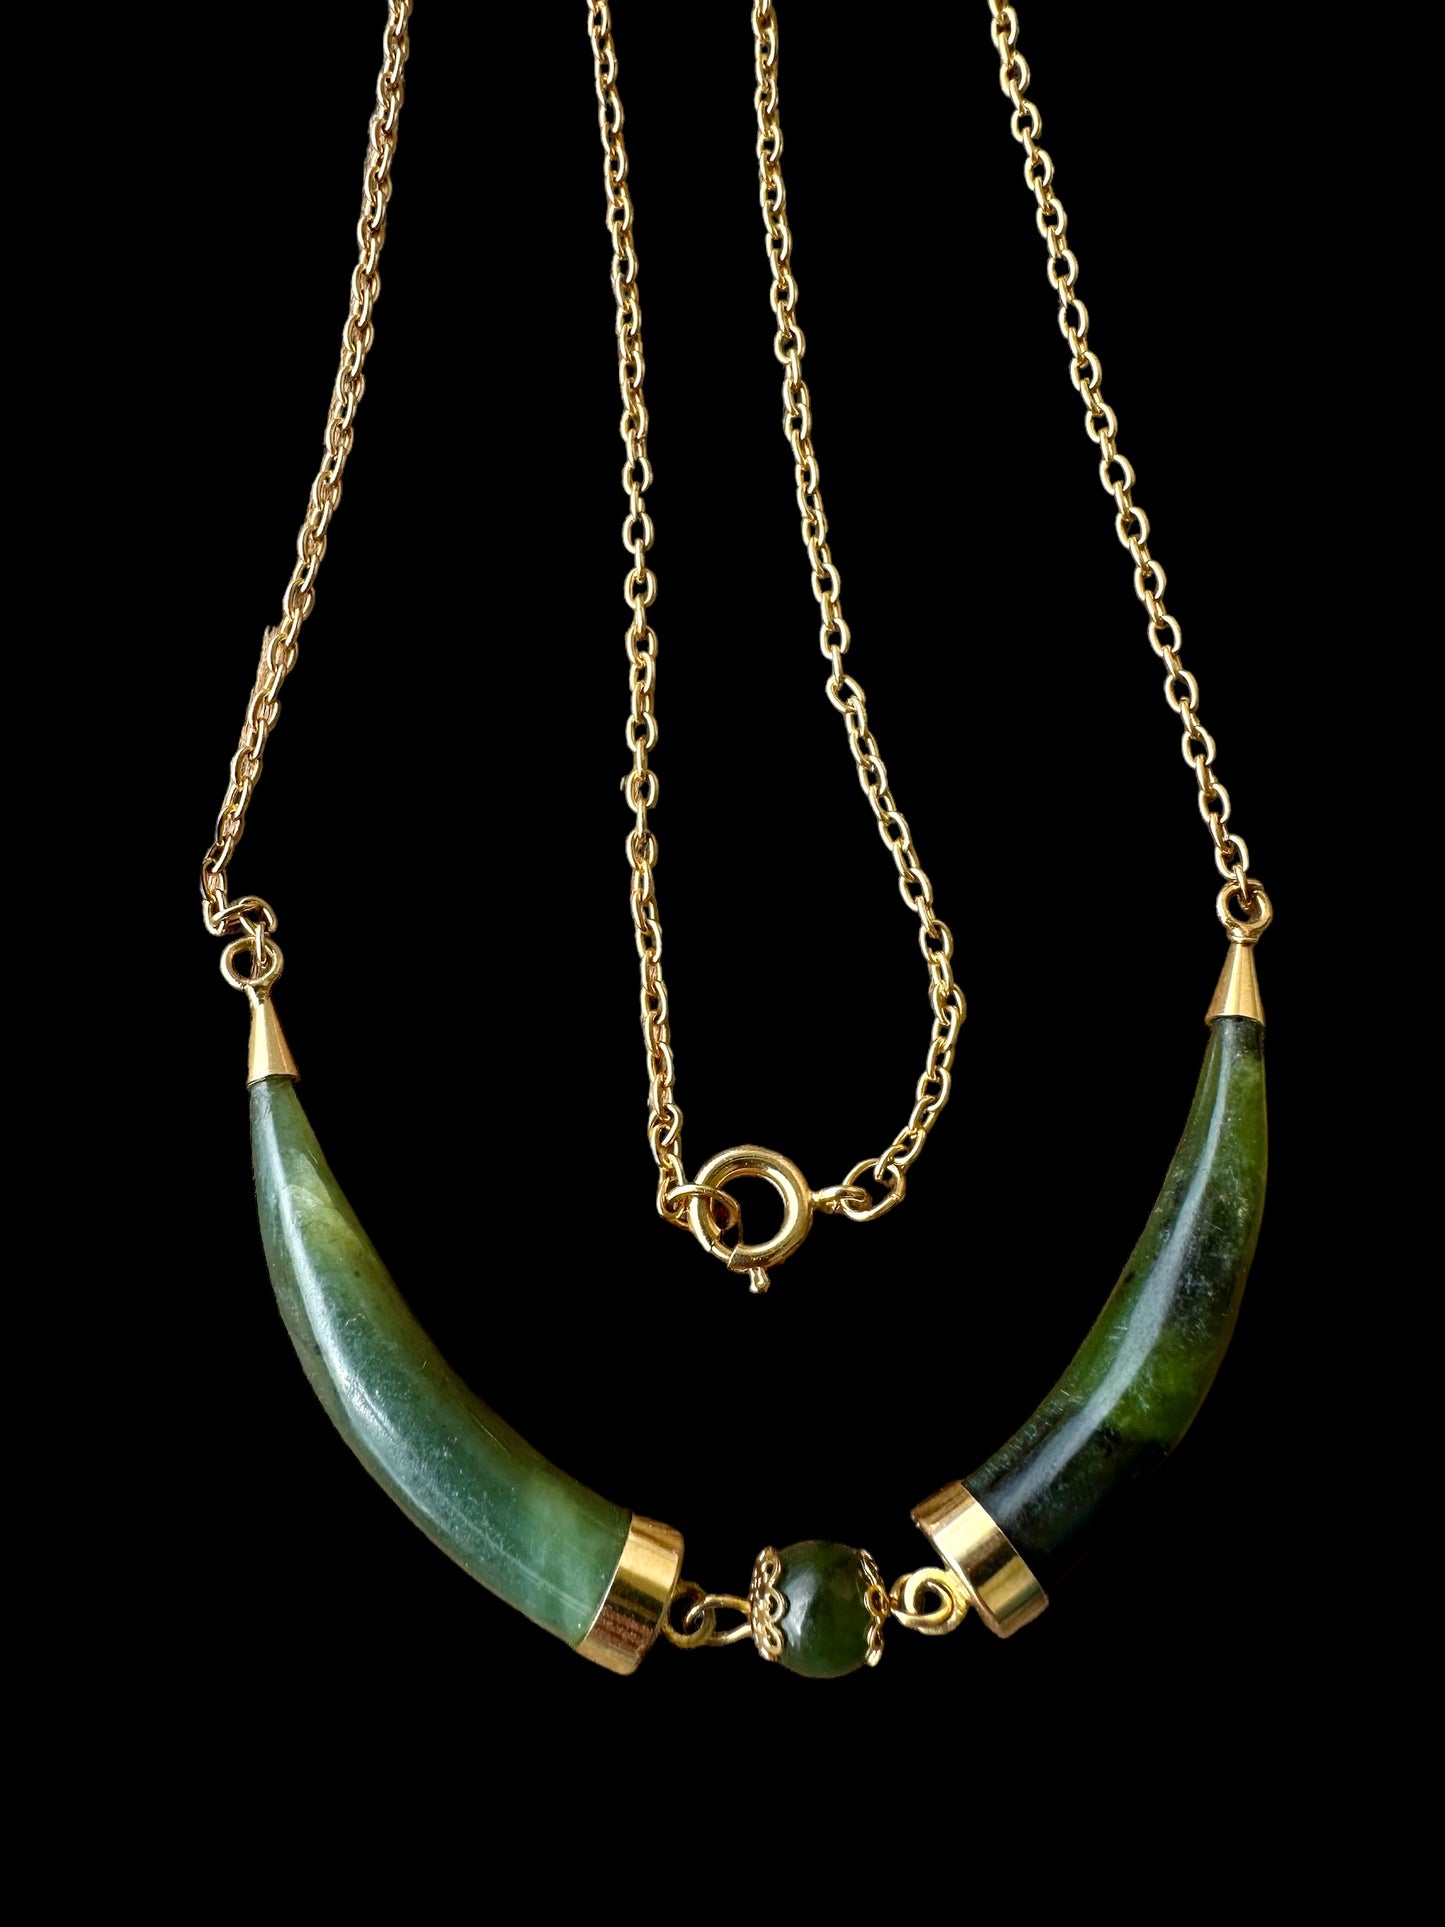 Attractive Australian Cowell jade necklace